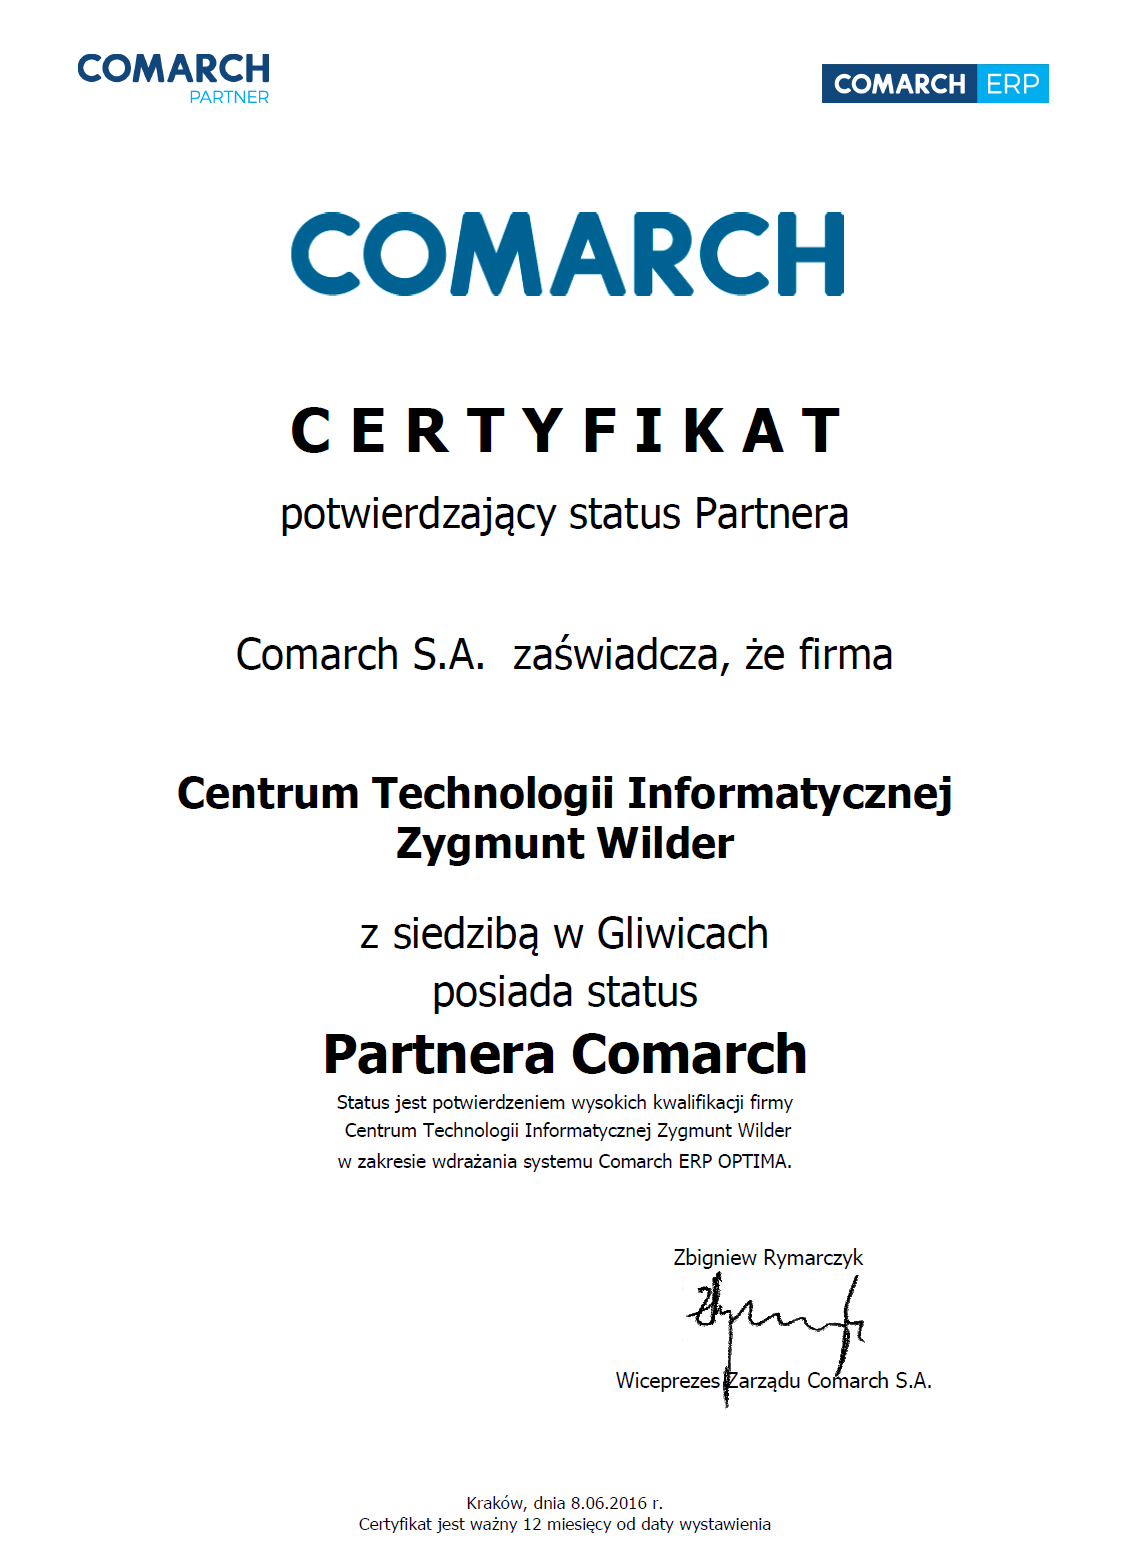 Certyfikat posiadania statusu Partner Comarch w 2016 roku